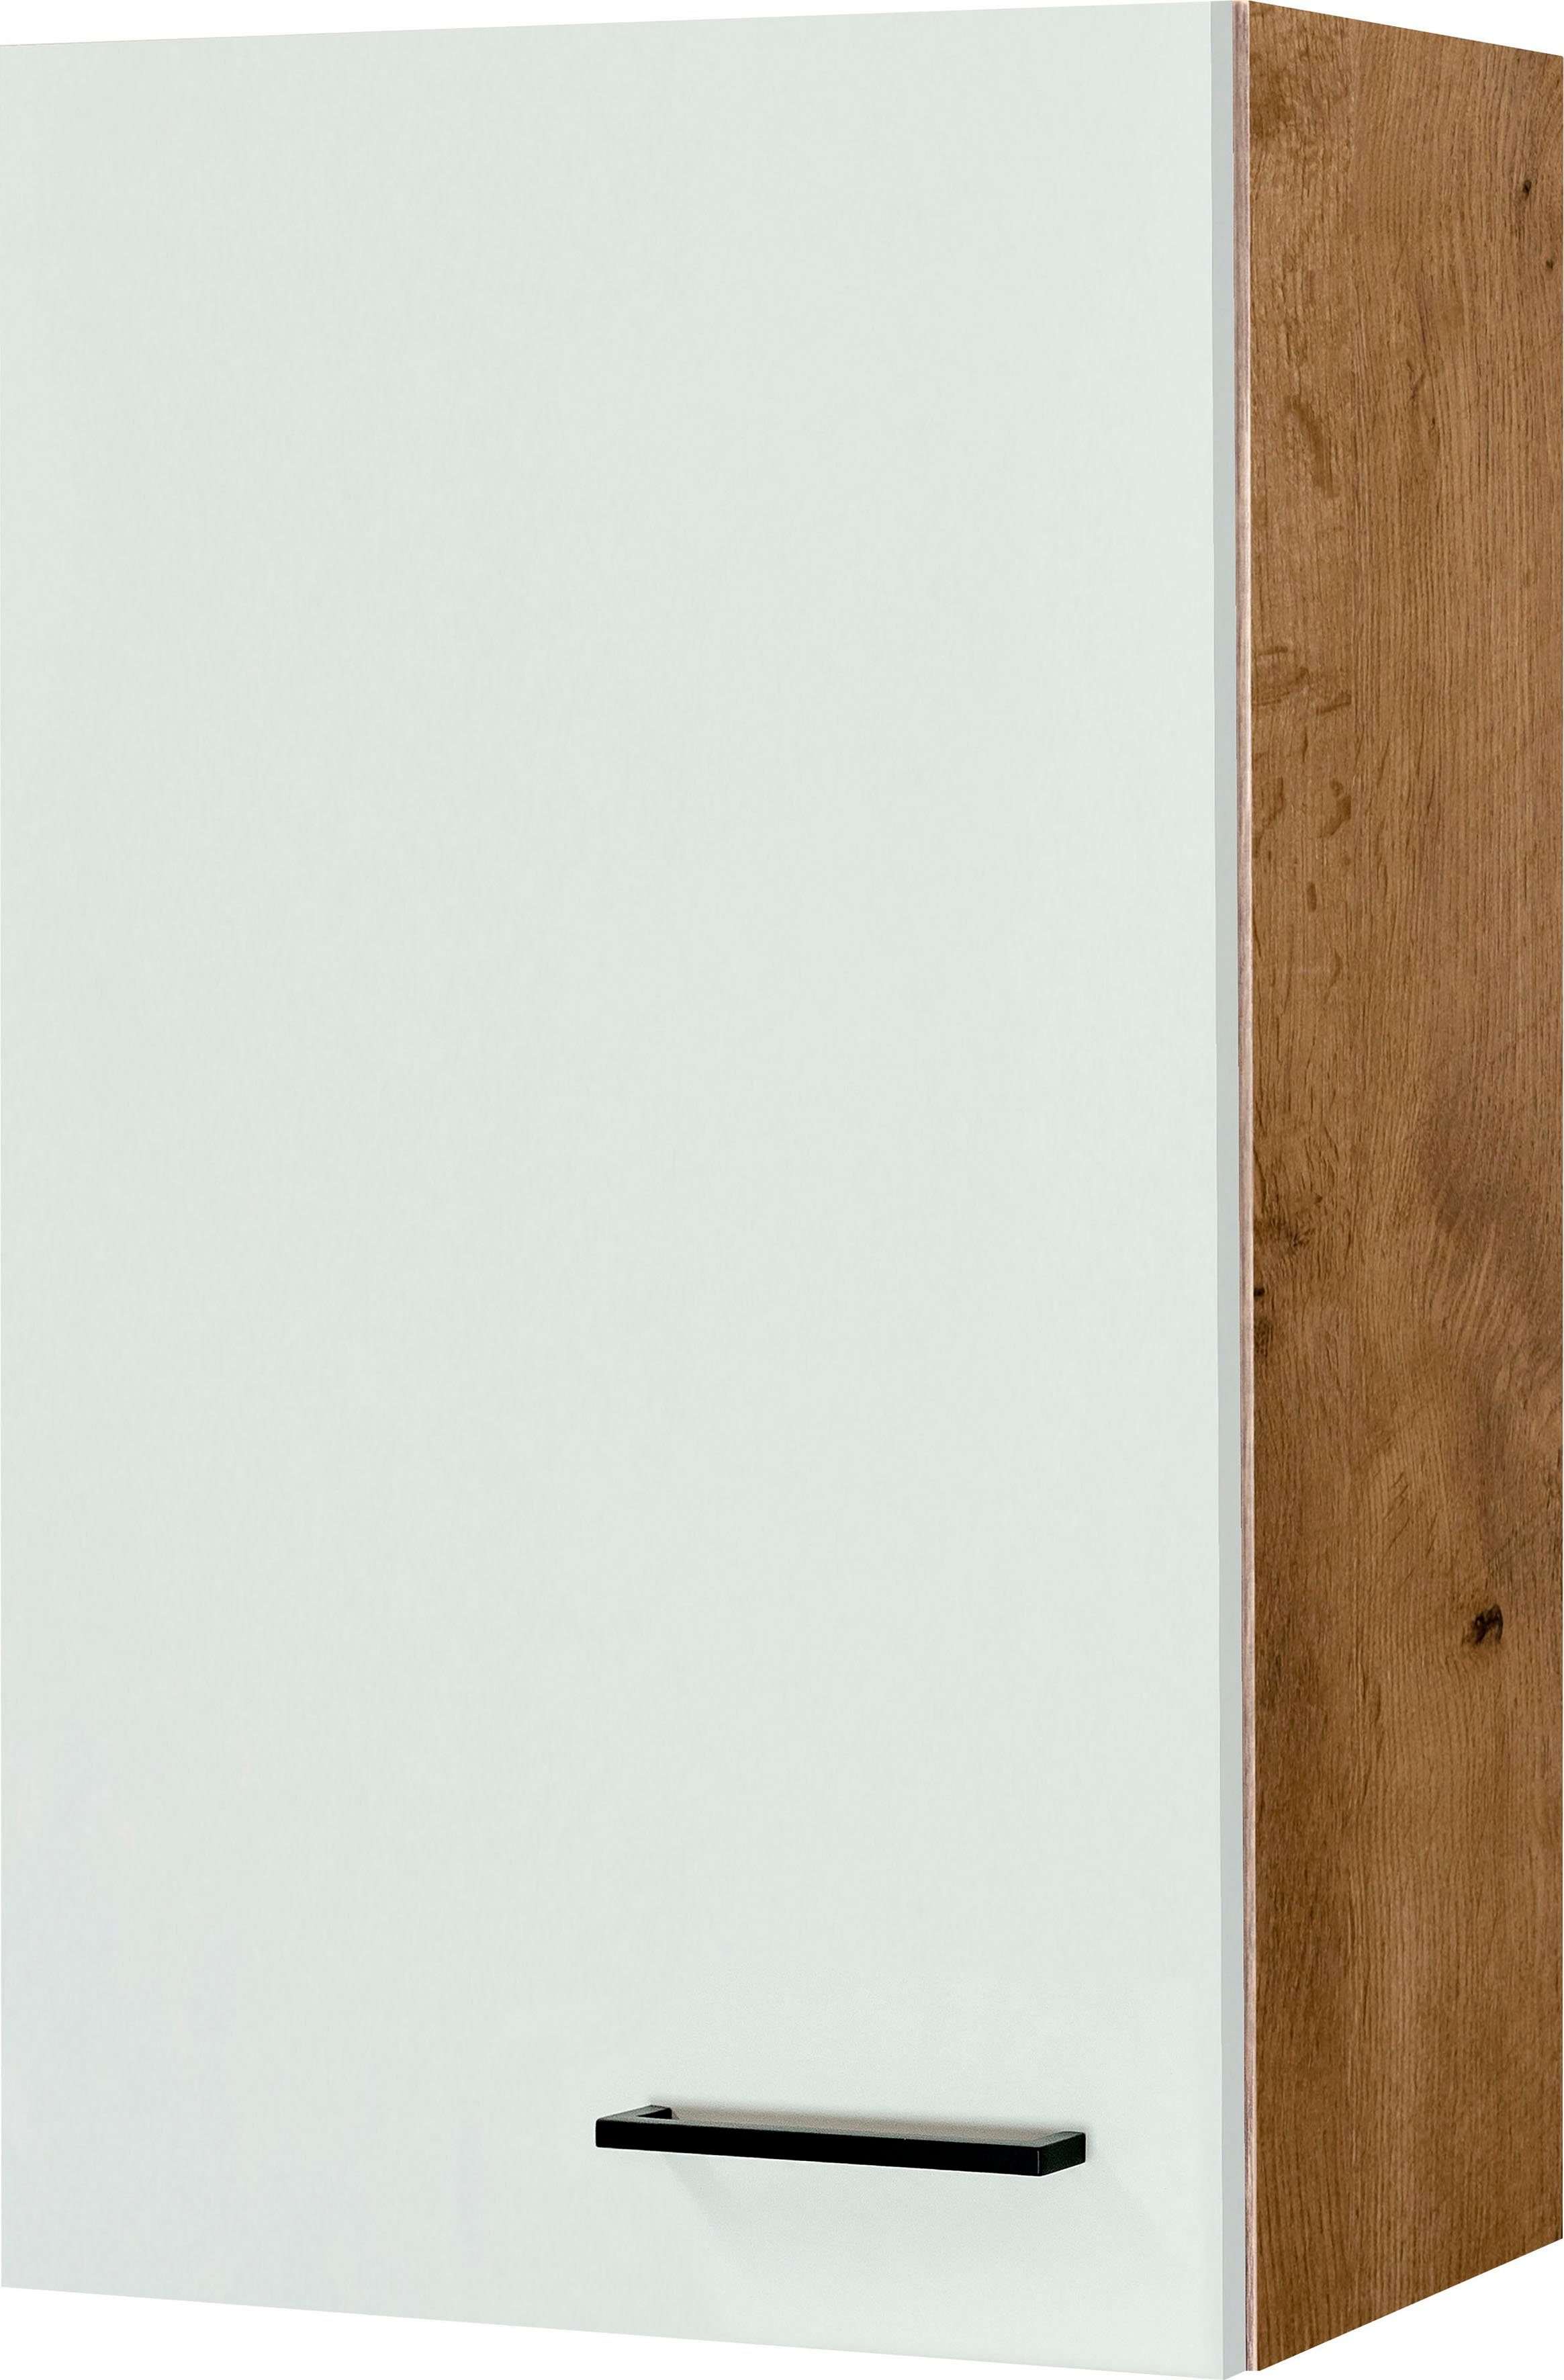 Flex-Well Hängeschrank Vintea (B x H x T) 50 x 89 x 32 cm, für viel Stauraum | Hängeschränke